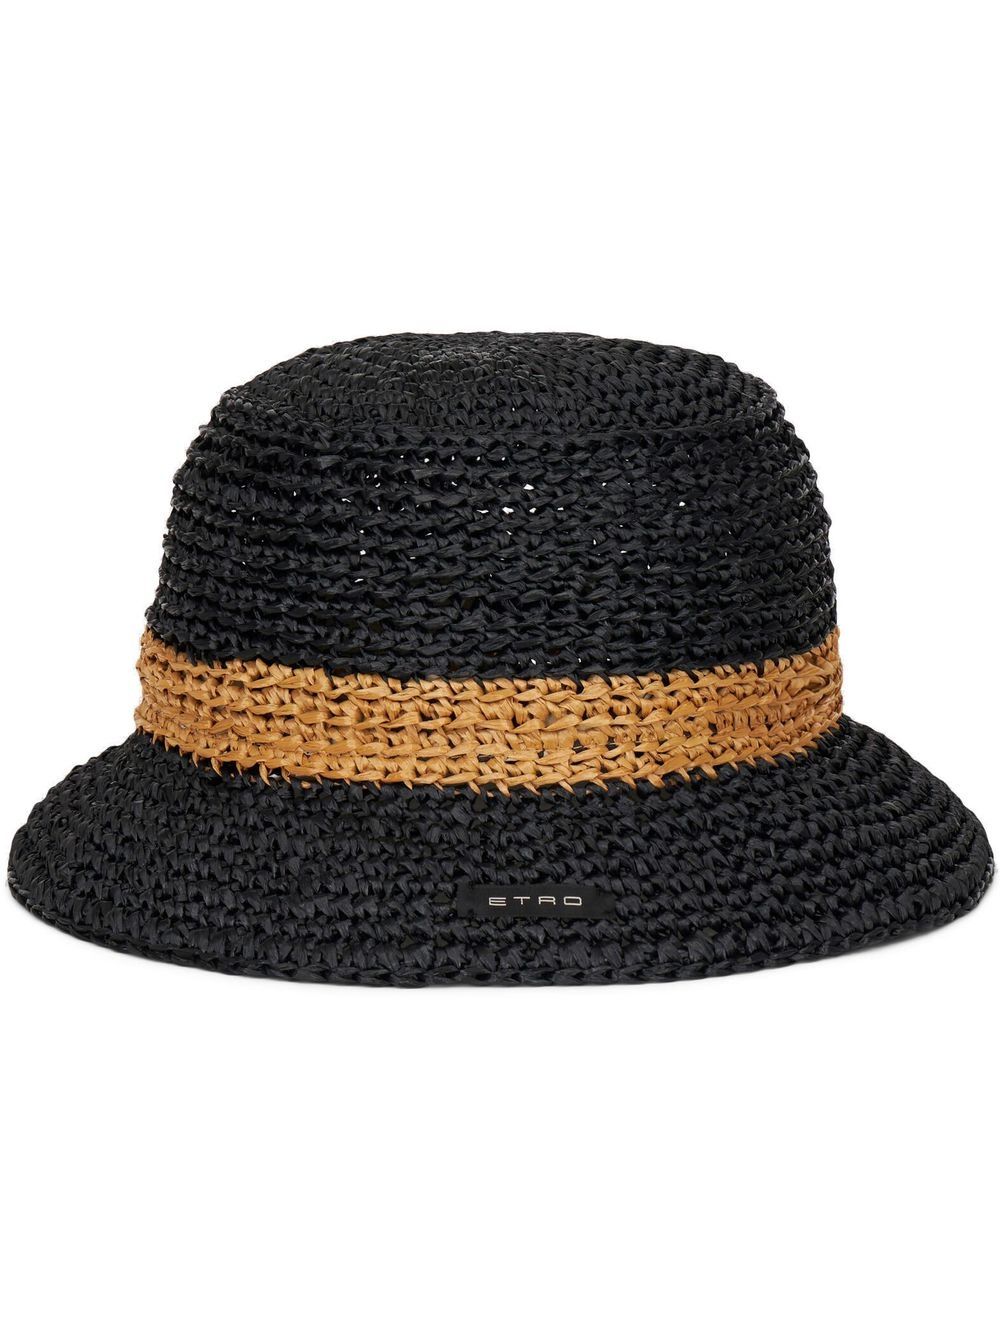 Black Woven bucket hat